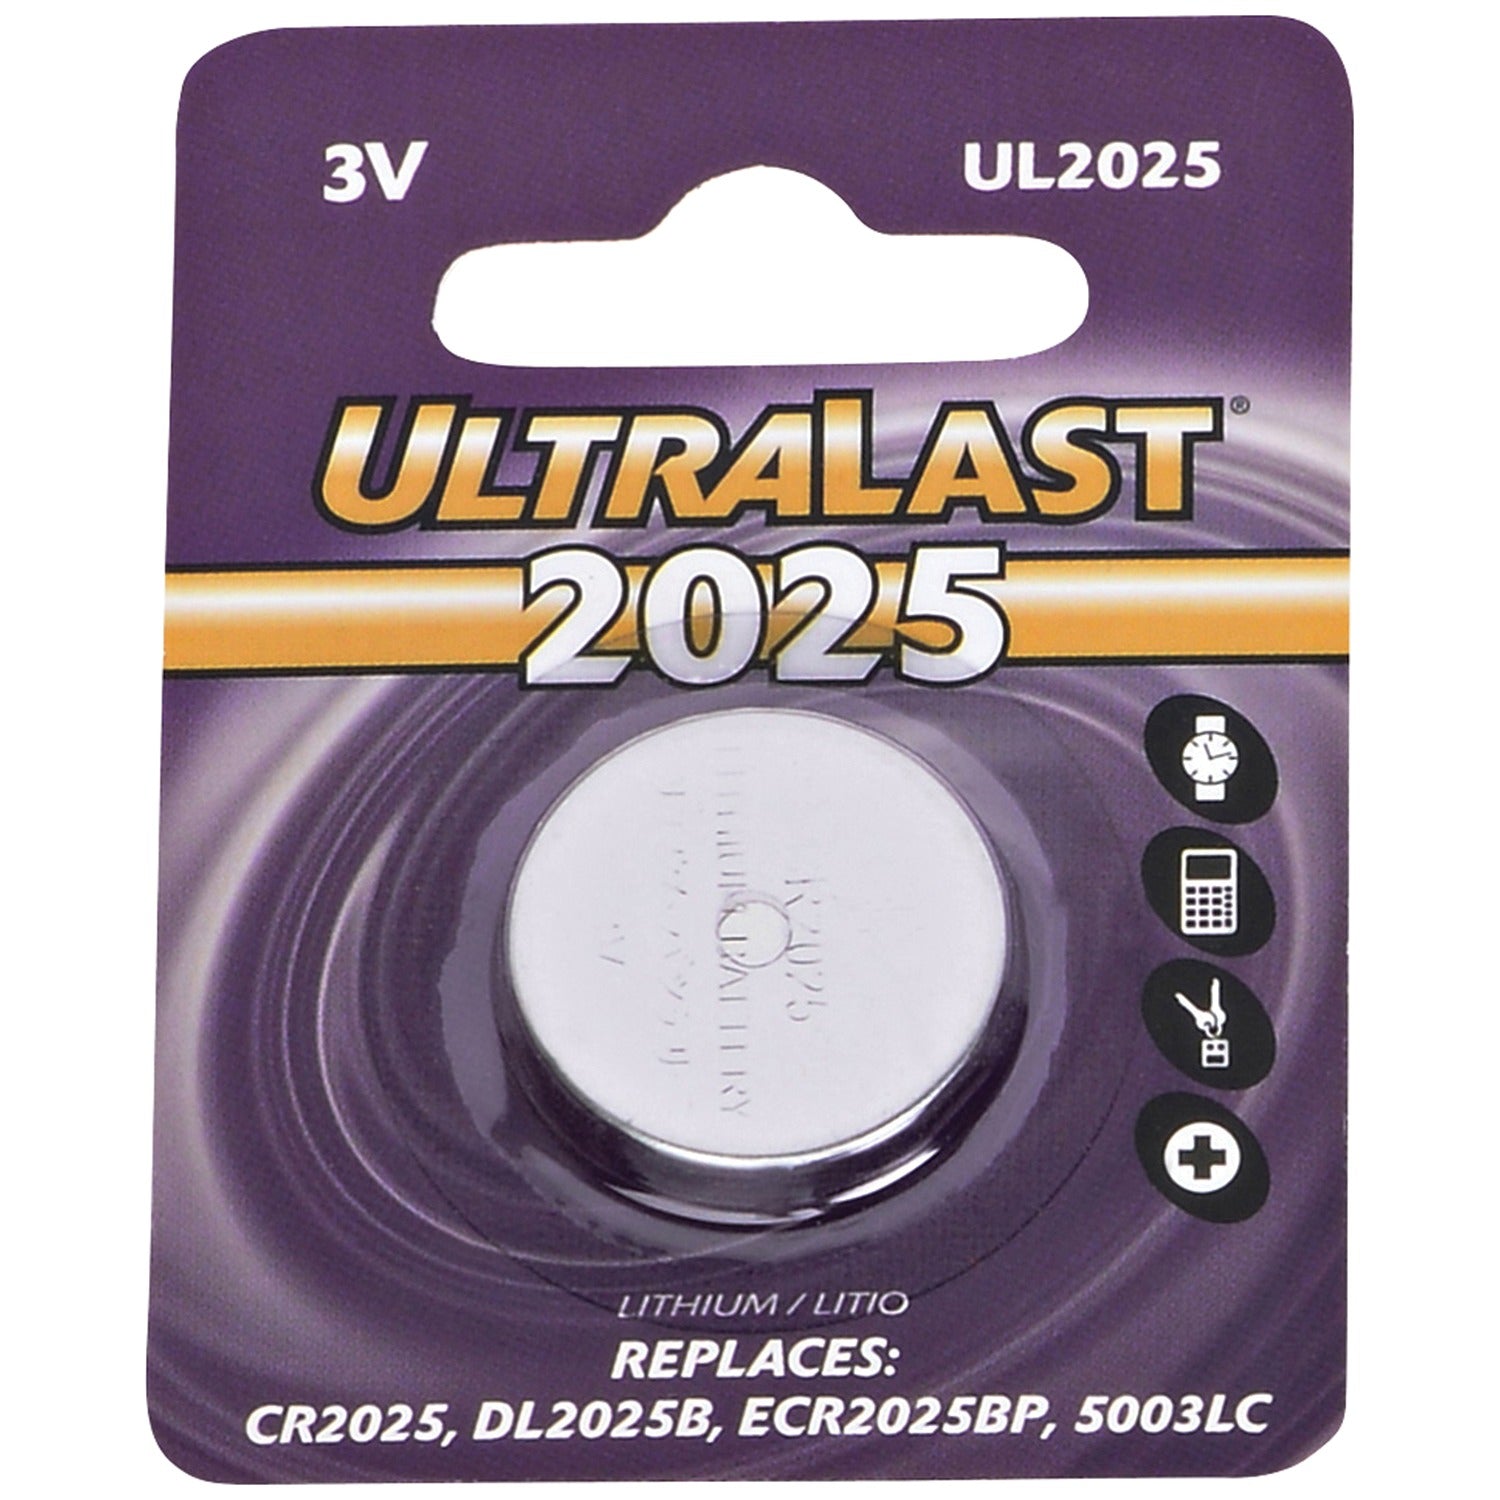 Ultralast 3V UL2025 Lithium Coin Cell Battery